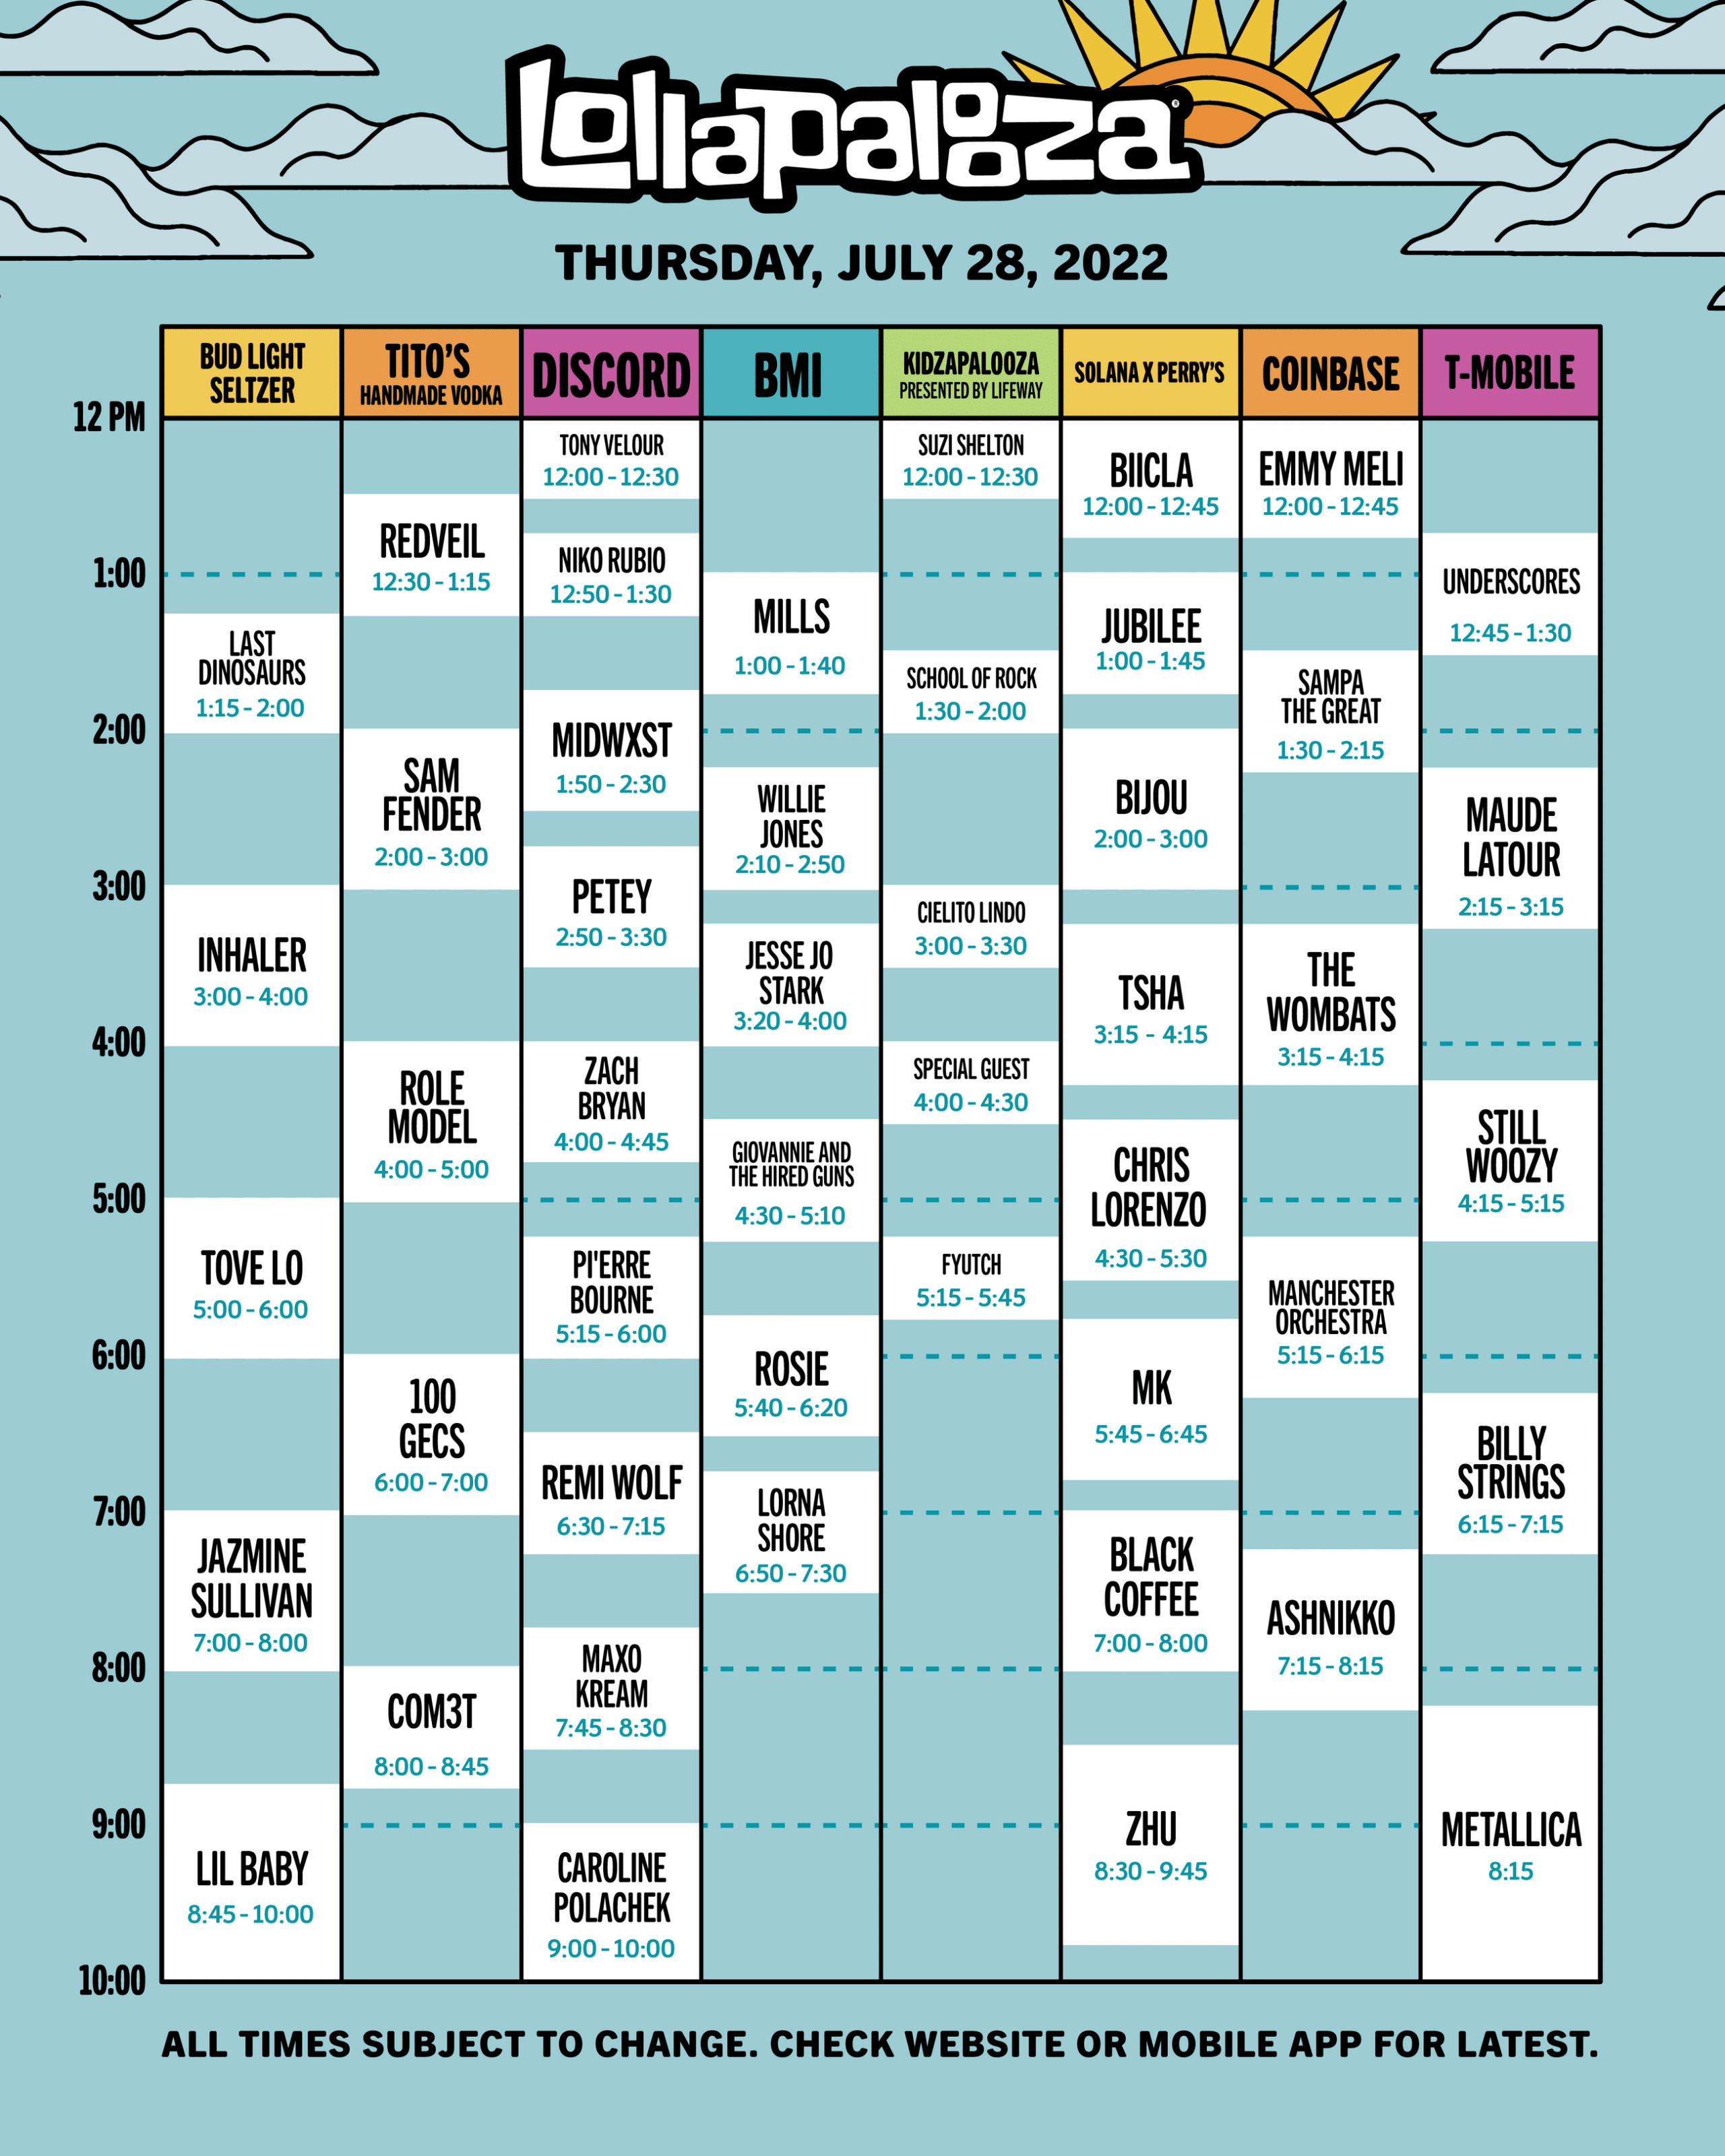 Thursday Lollapalooza 2022 Schedule